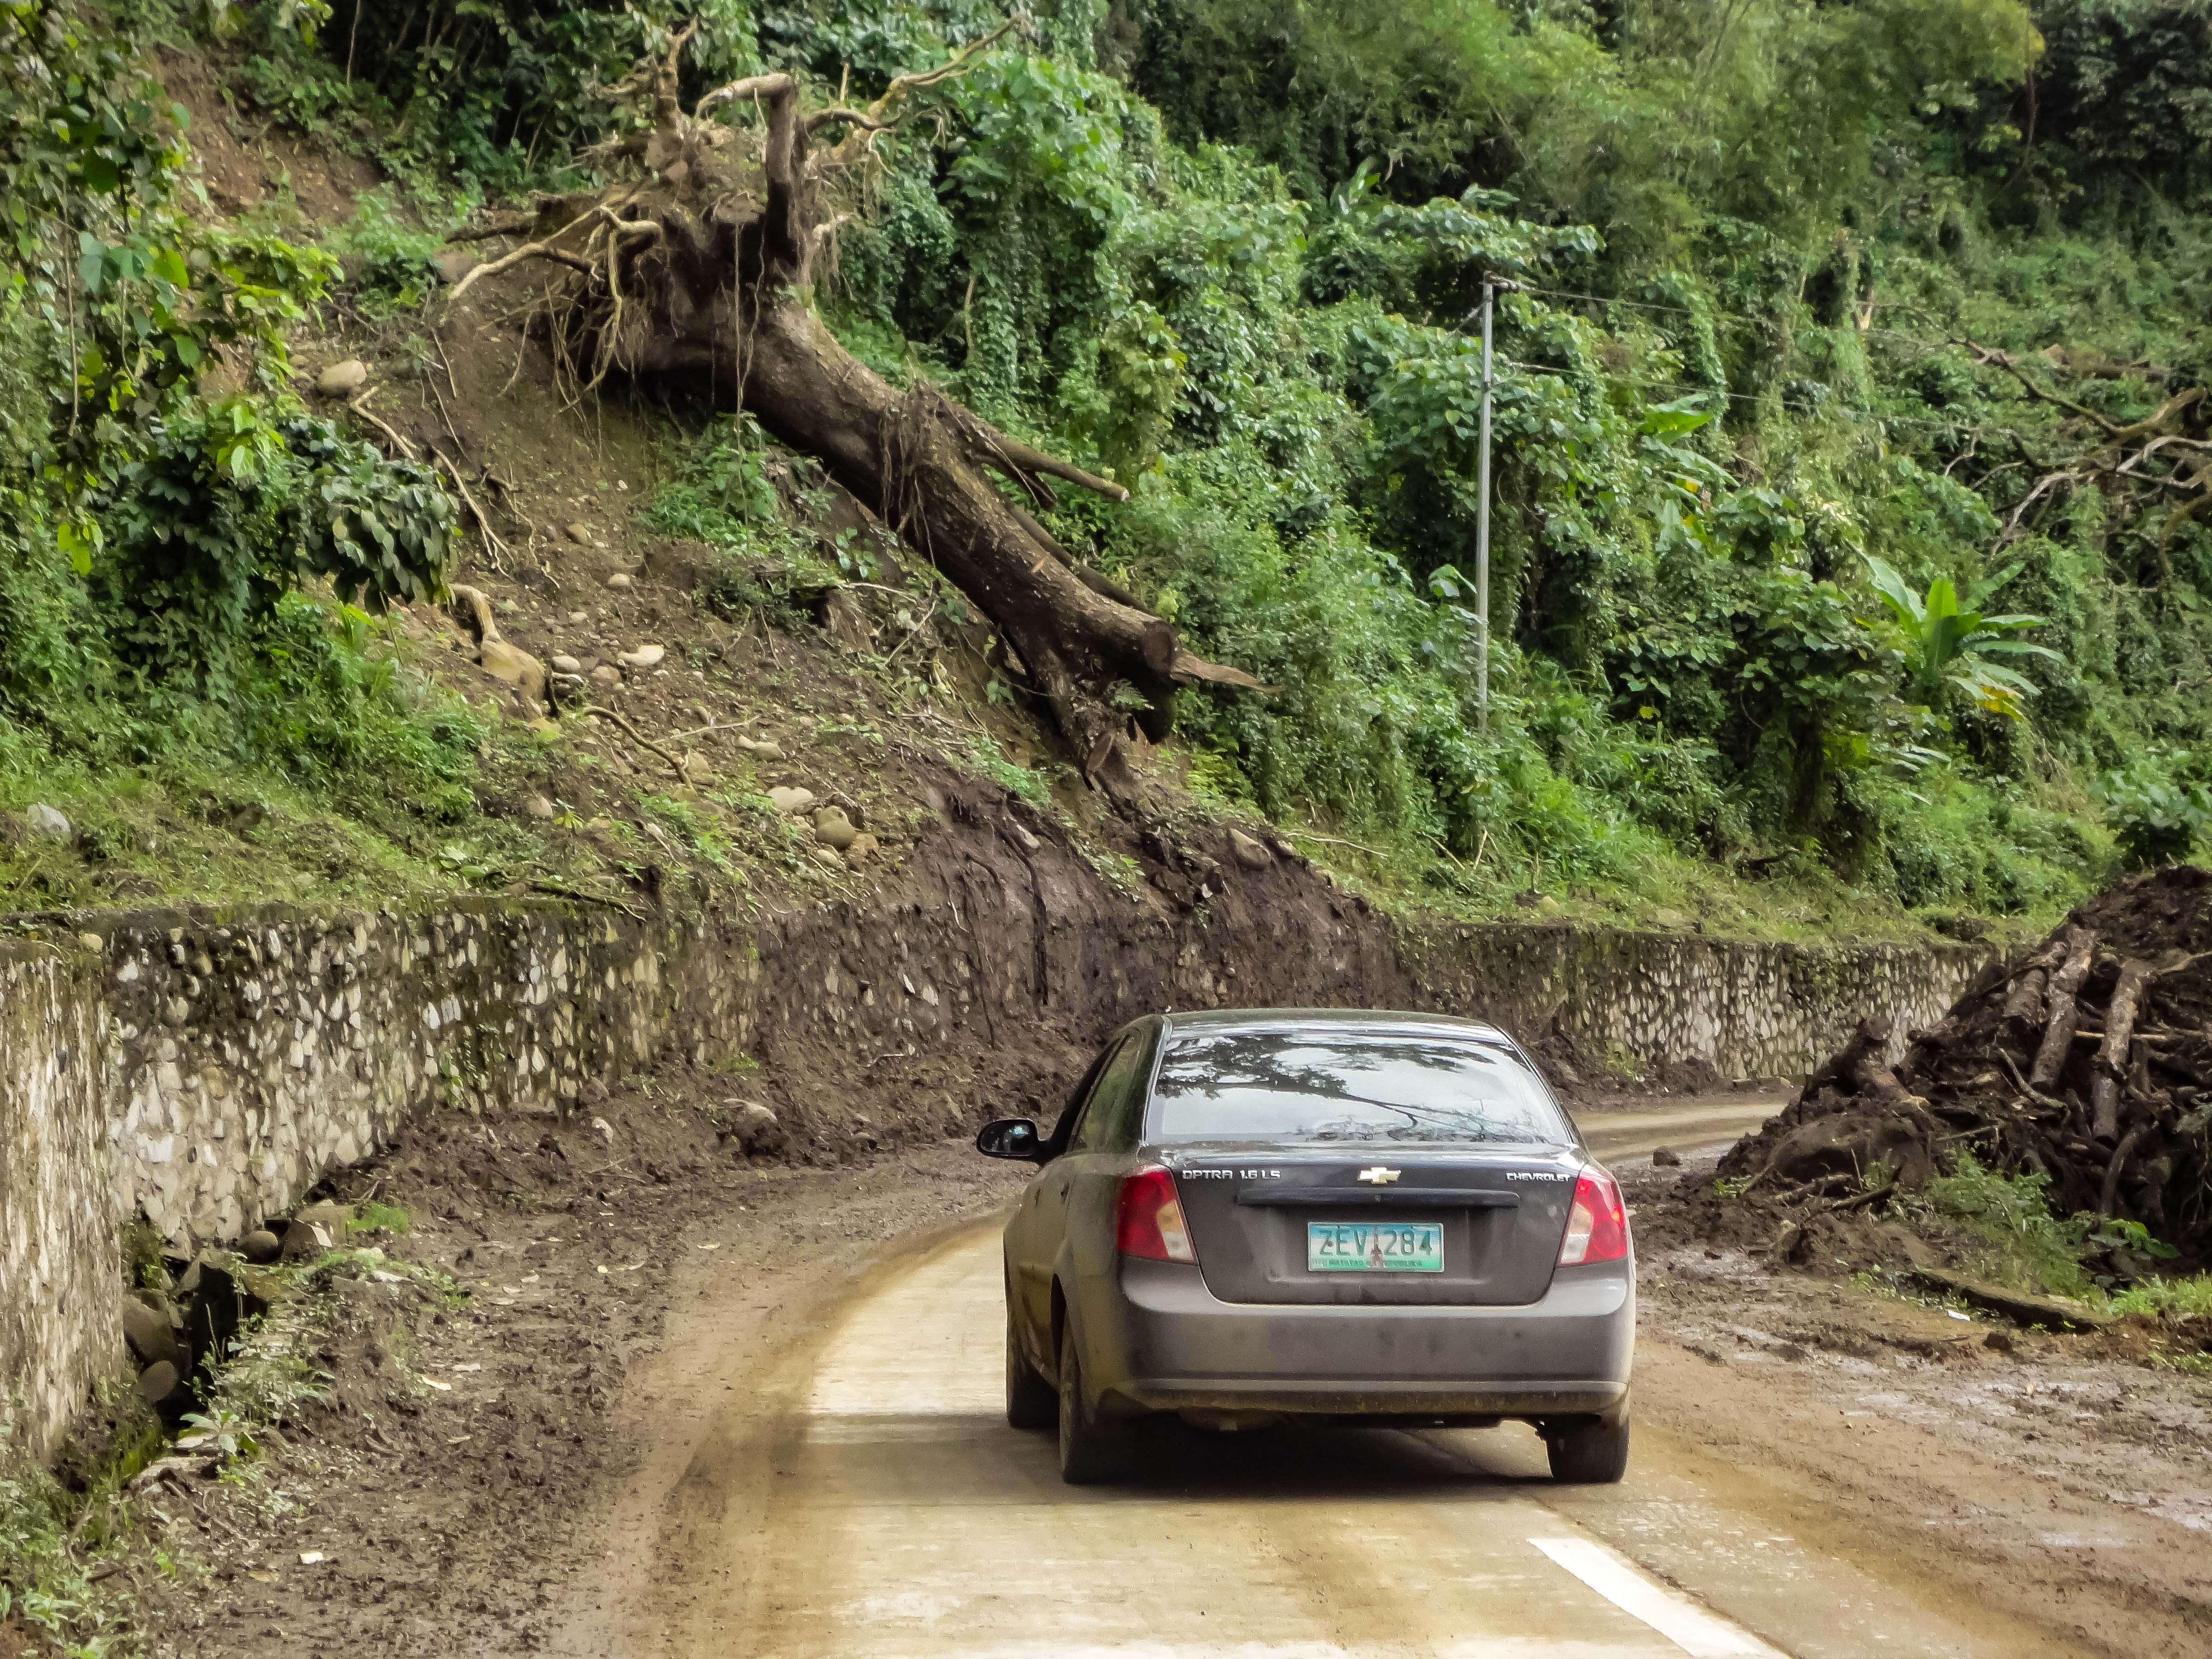 Philippines, Kalinga Prov, Tree And Car, 2011, DSC00287